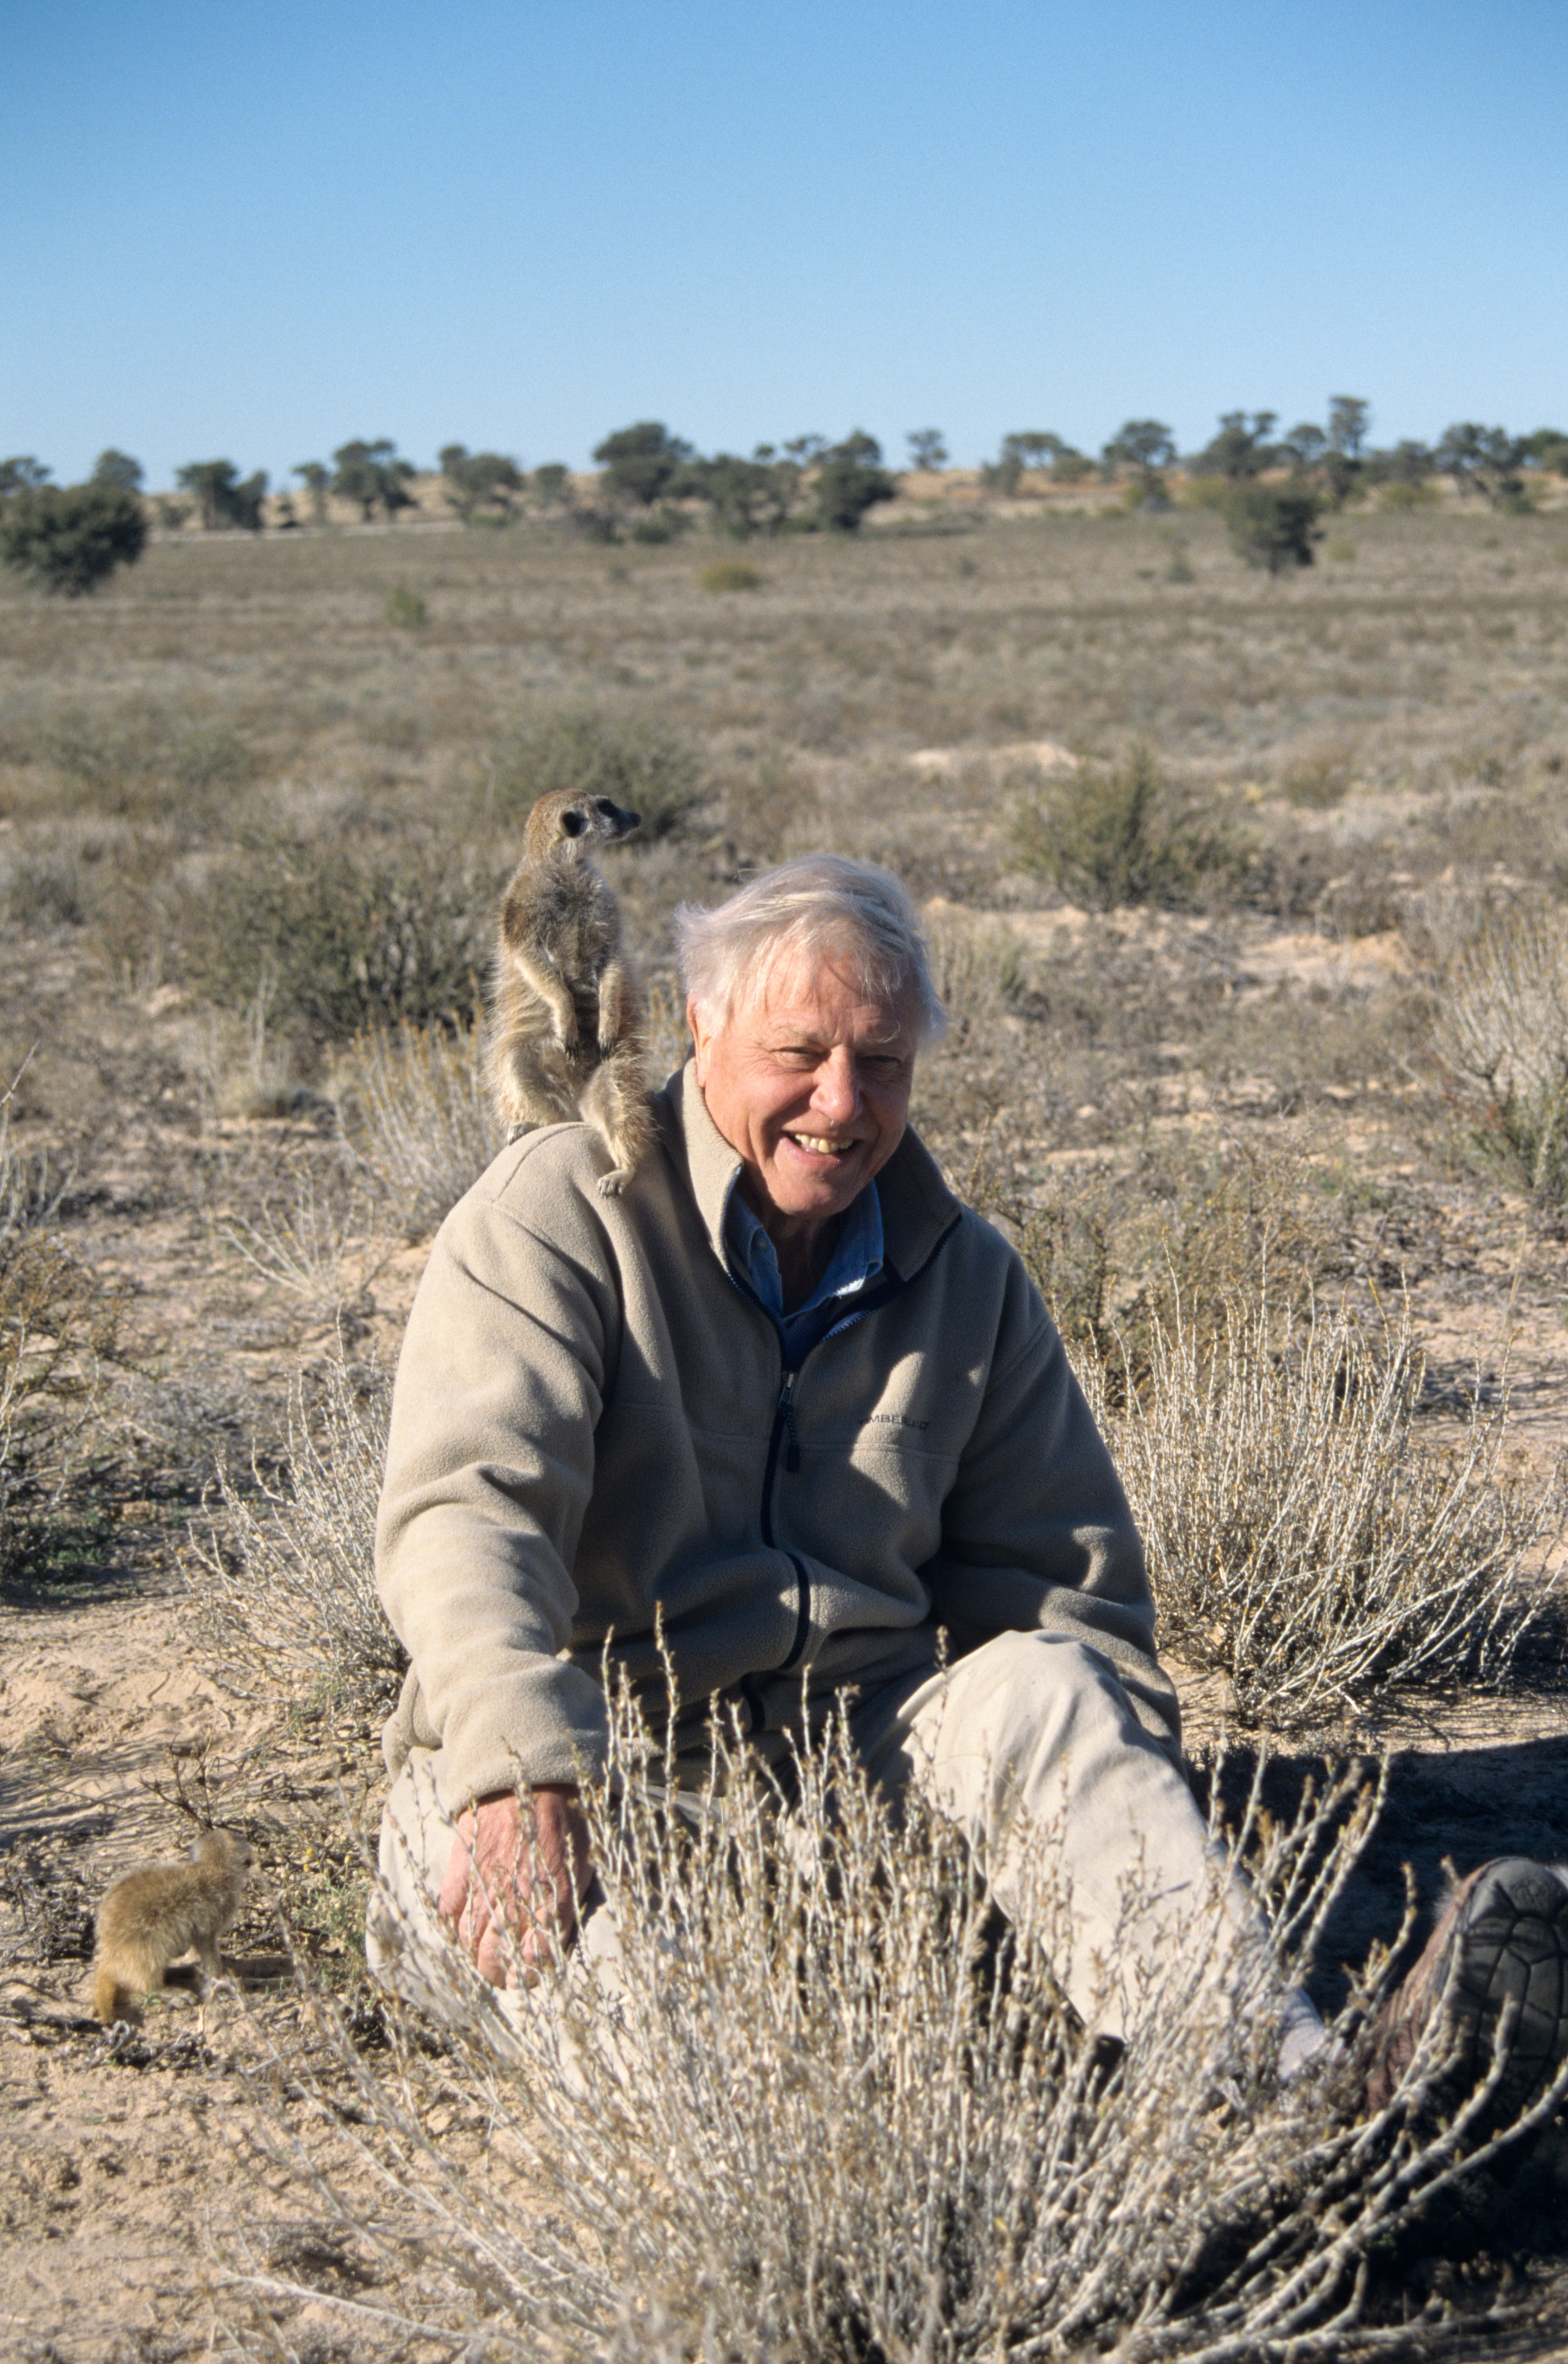 Sir David Attenborough with meerkat on shoulder for The Life of Mammals, Kalahari Desert, South Africa 